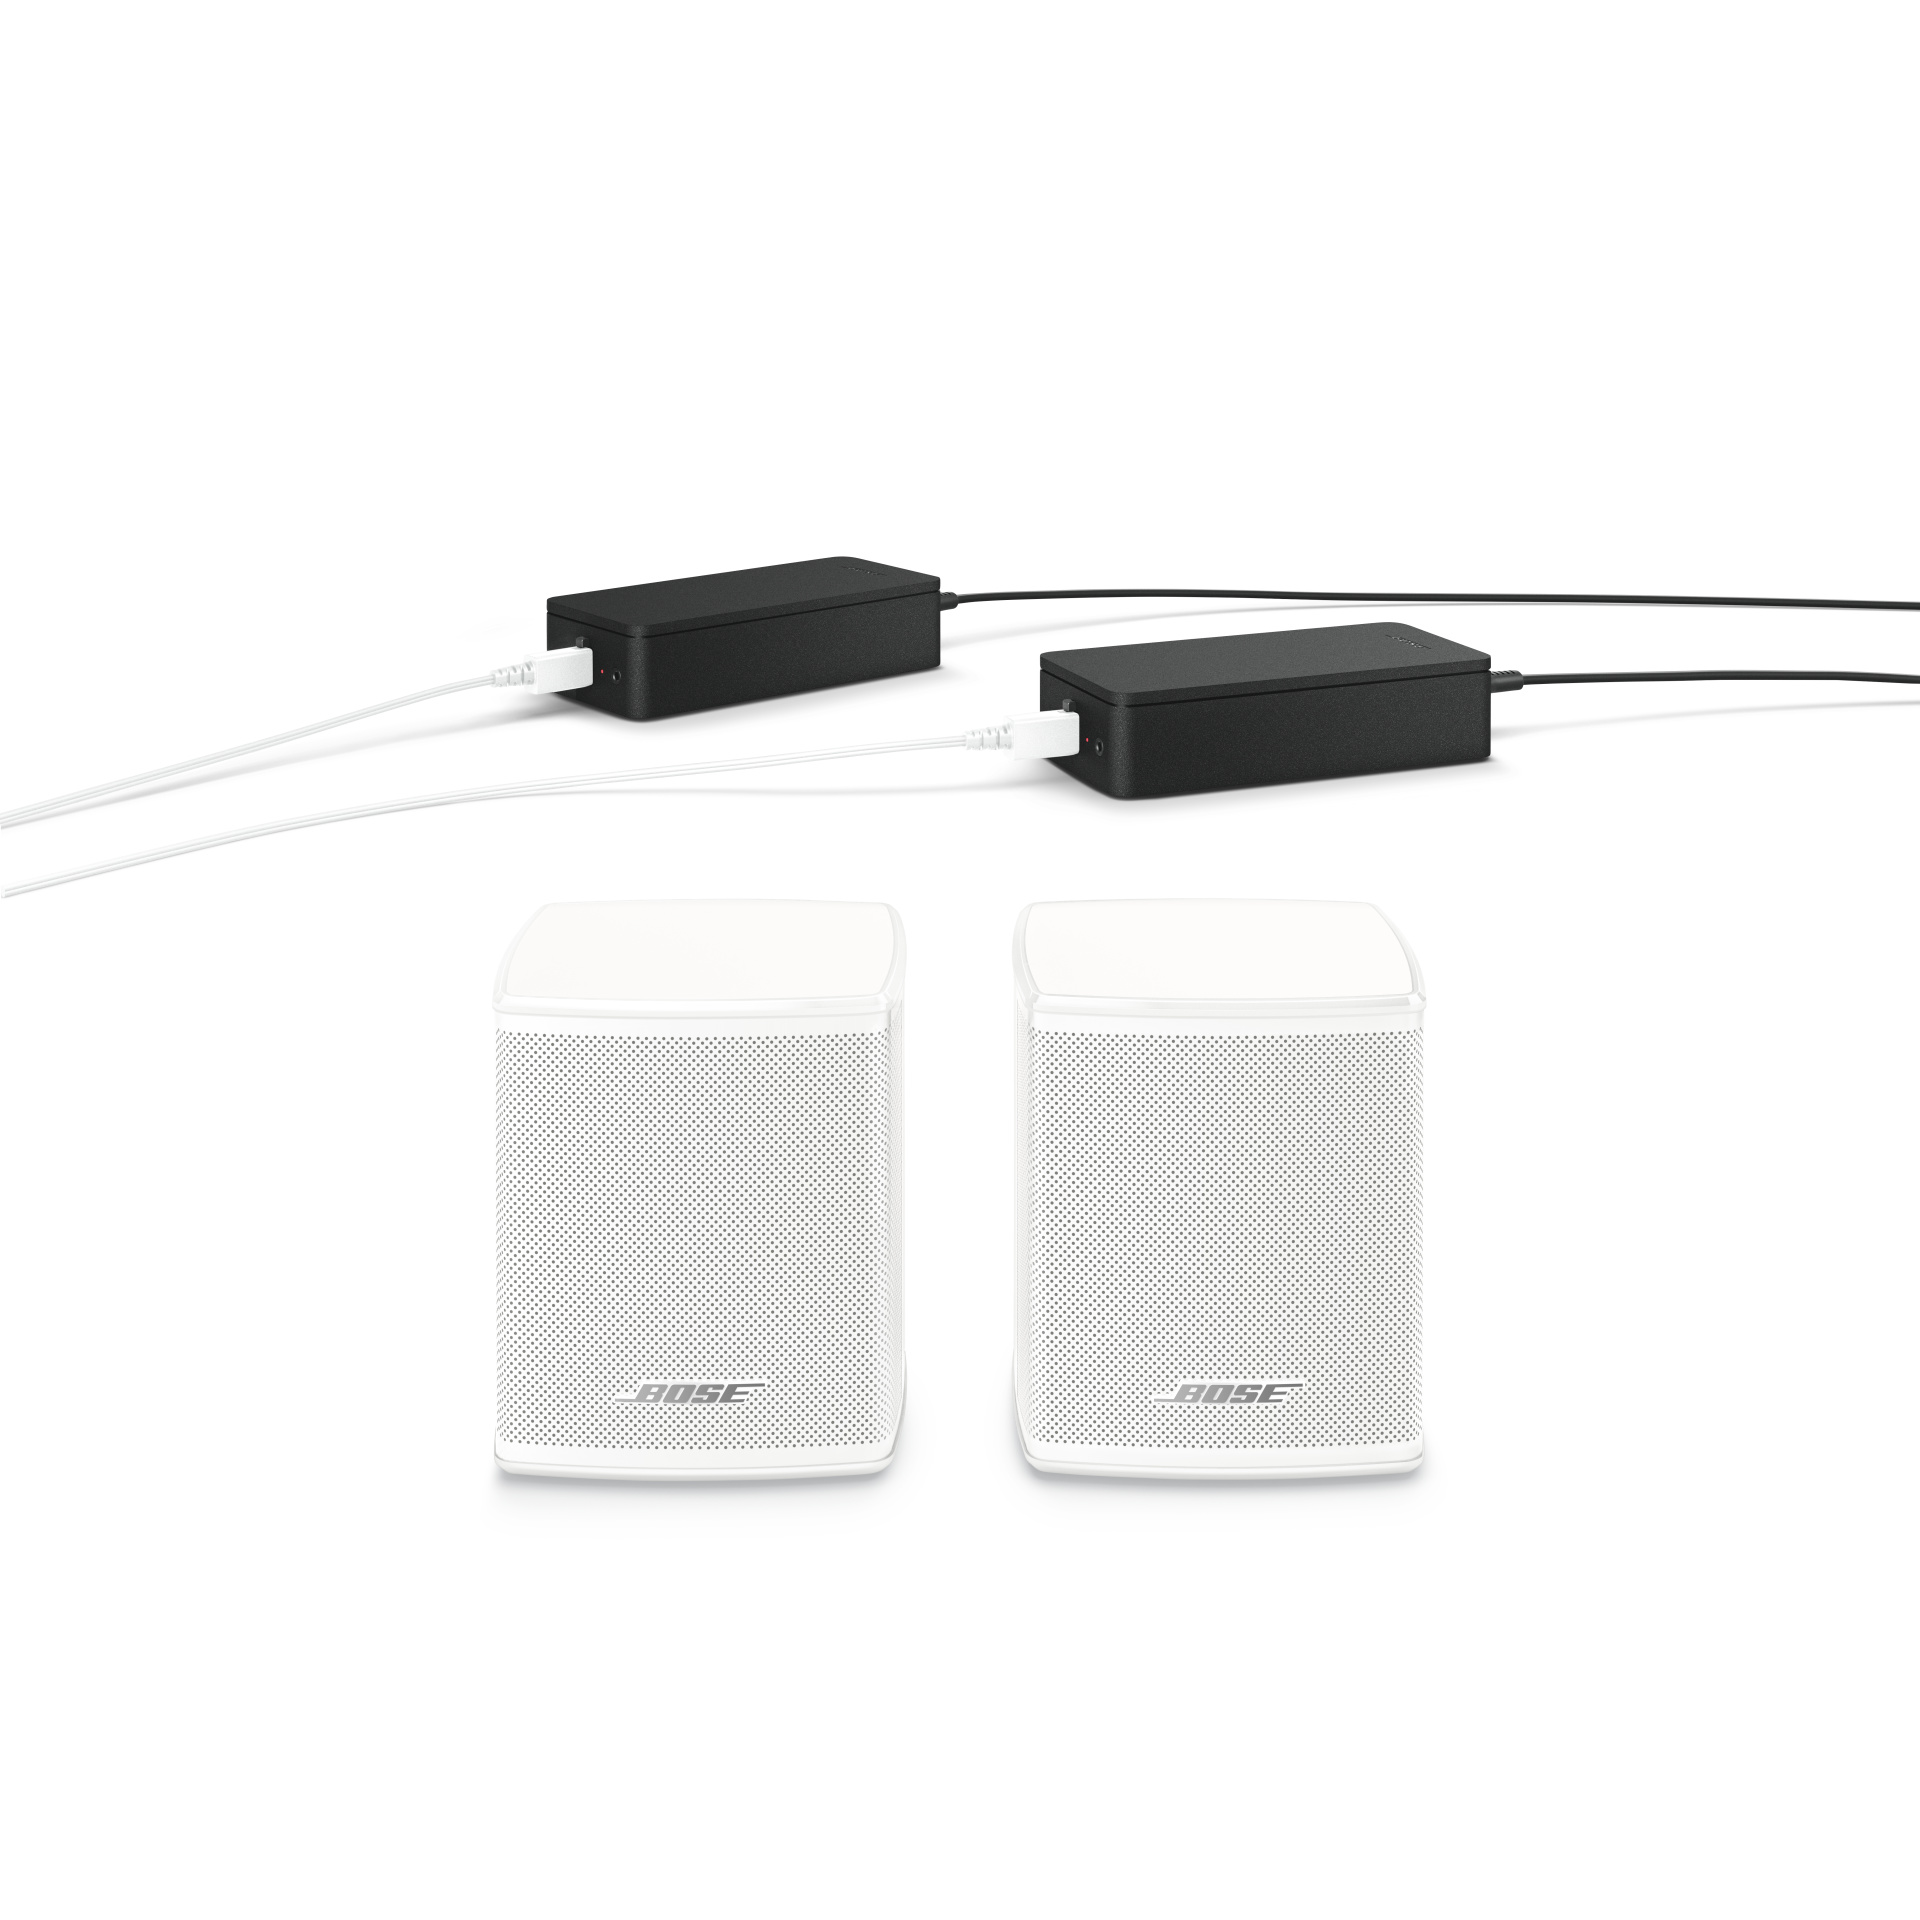 Bose Surround Sound Rear Speakers for Bose Soundbars, White - image 4 of 5